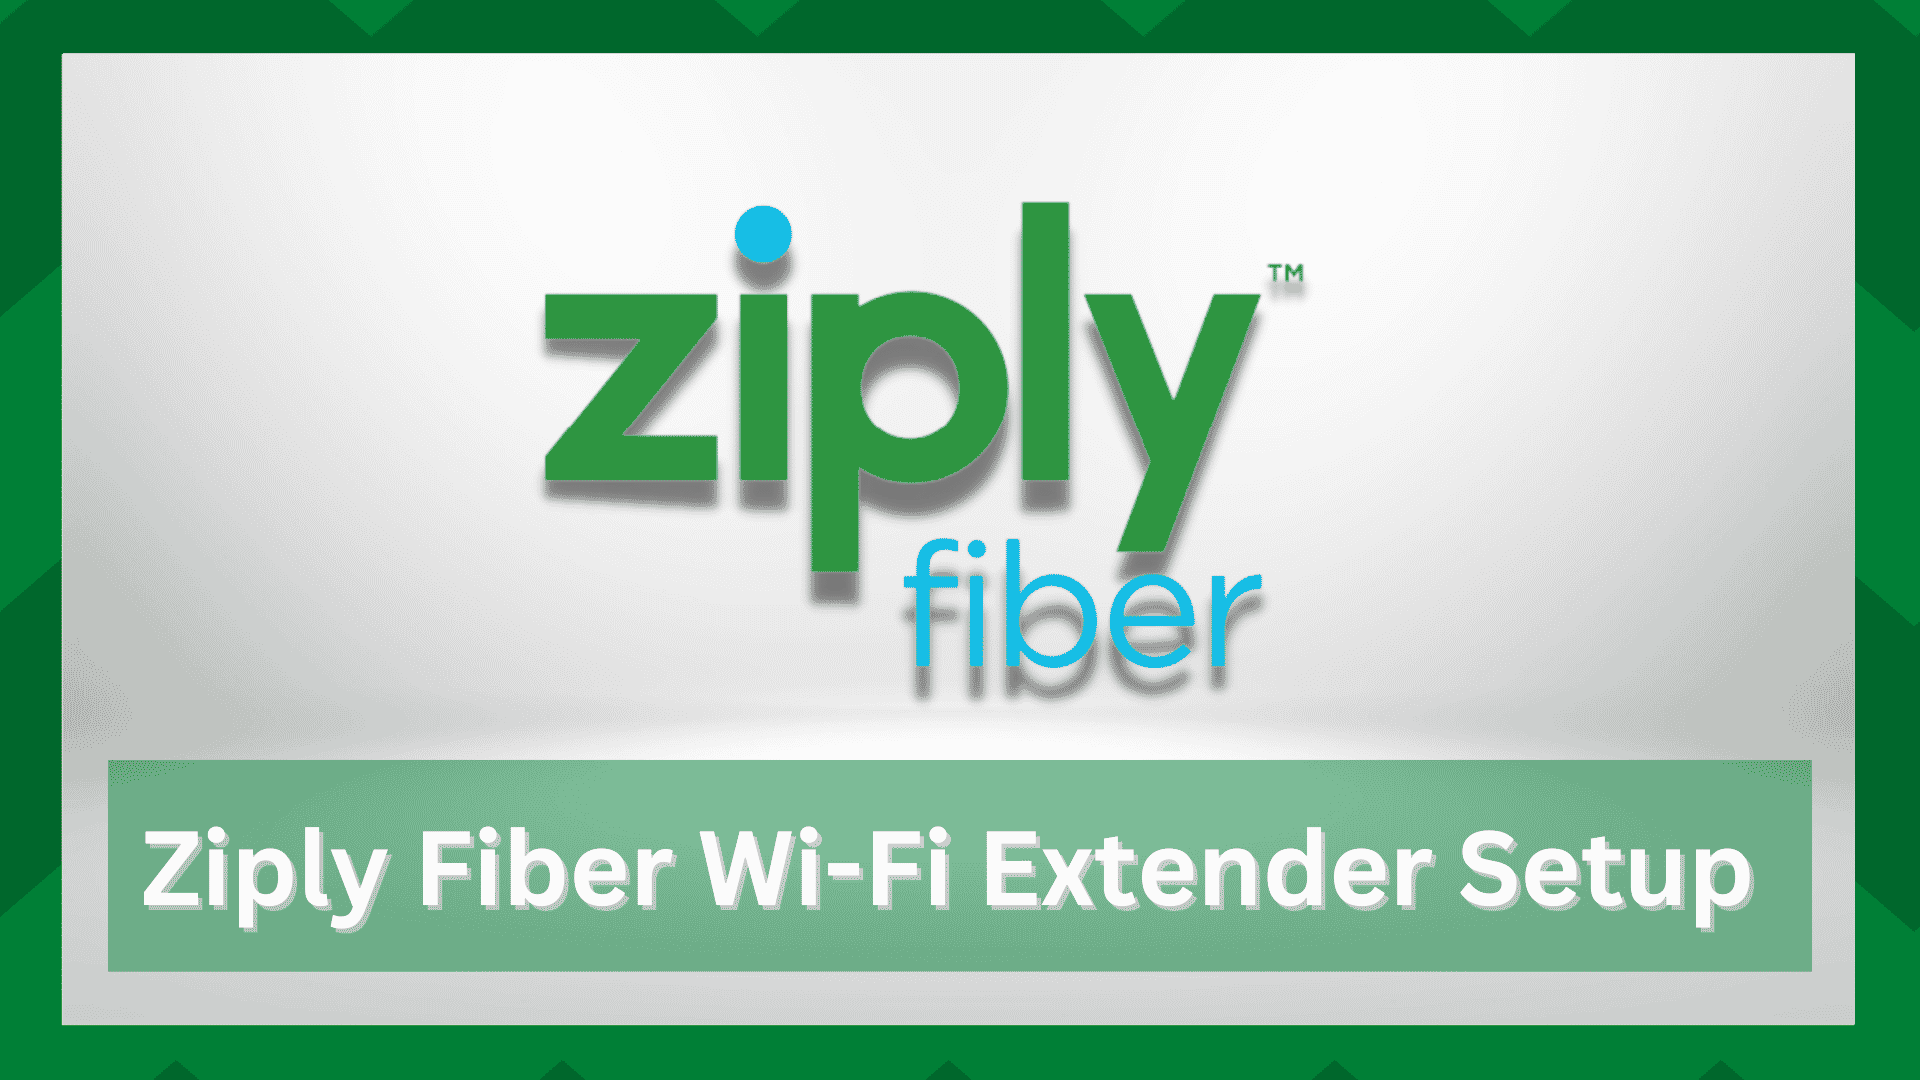 Ziply Fiber Wi-Fi Extender Setup